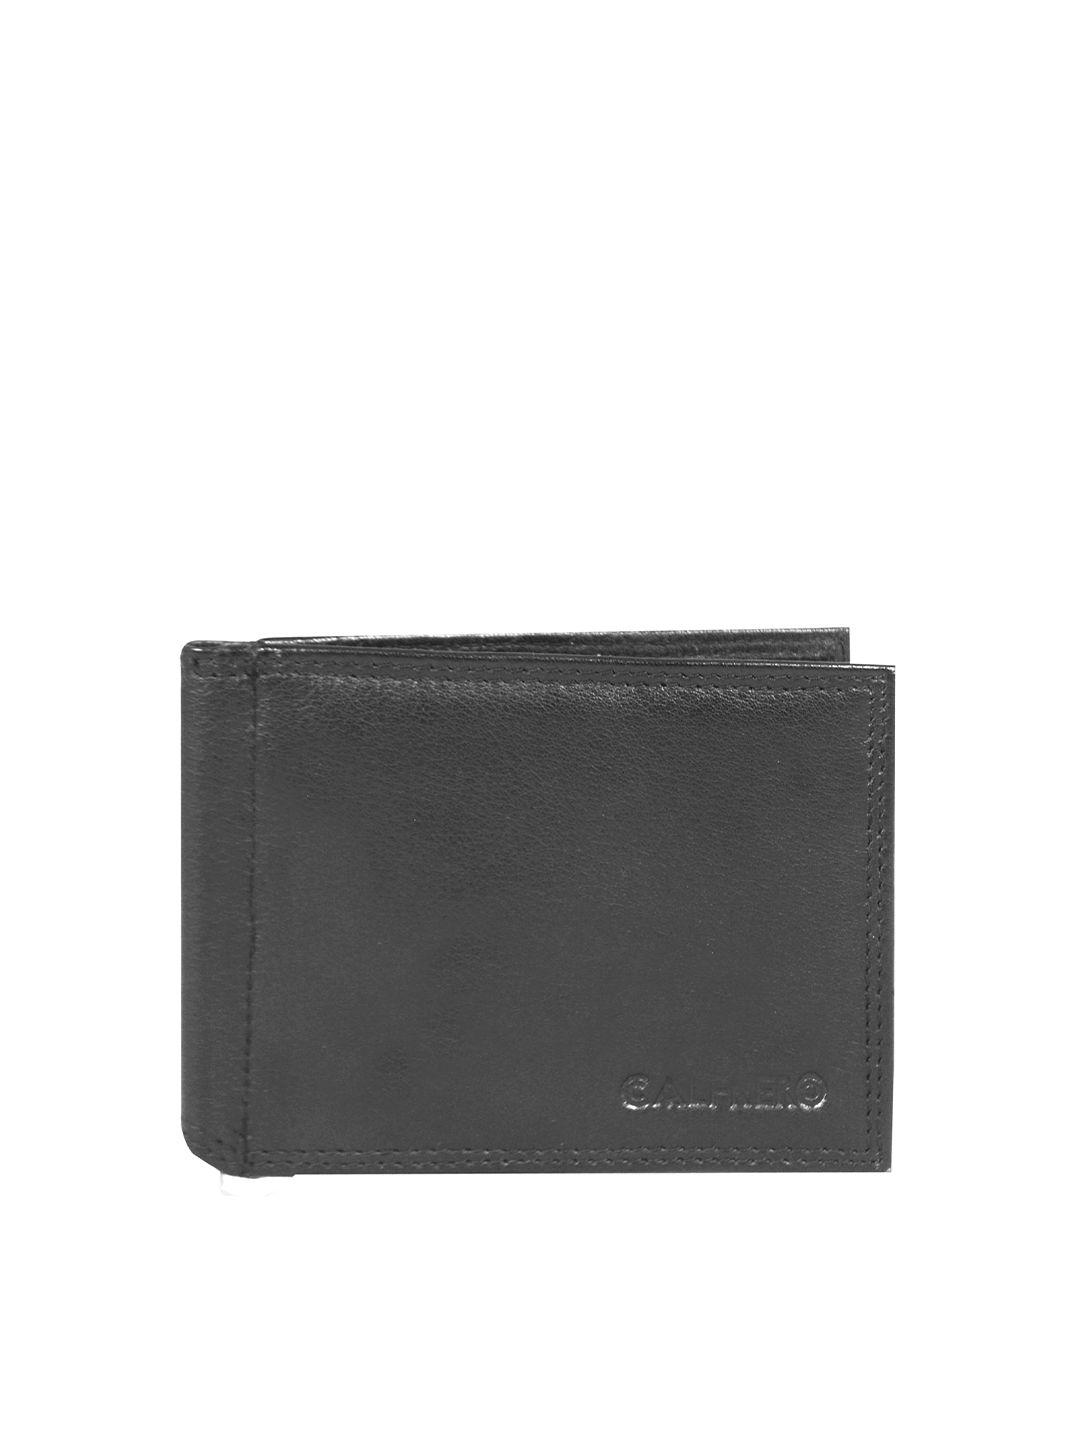 calfnero unisex black leather card holder